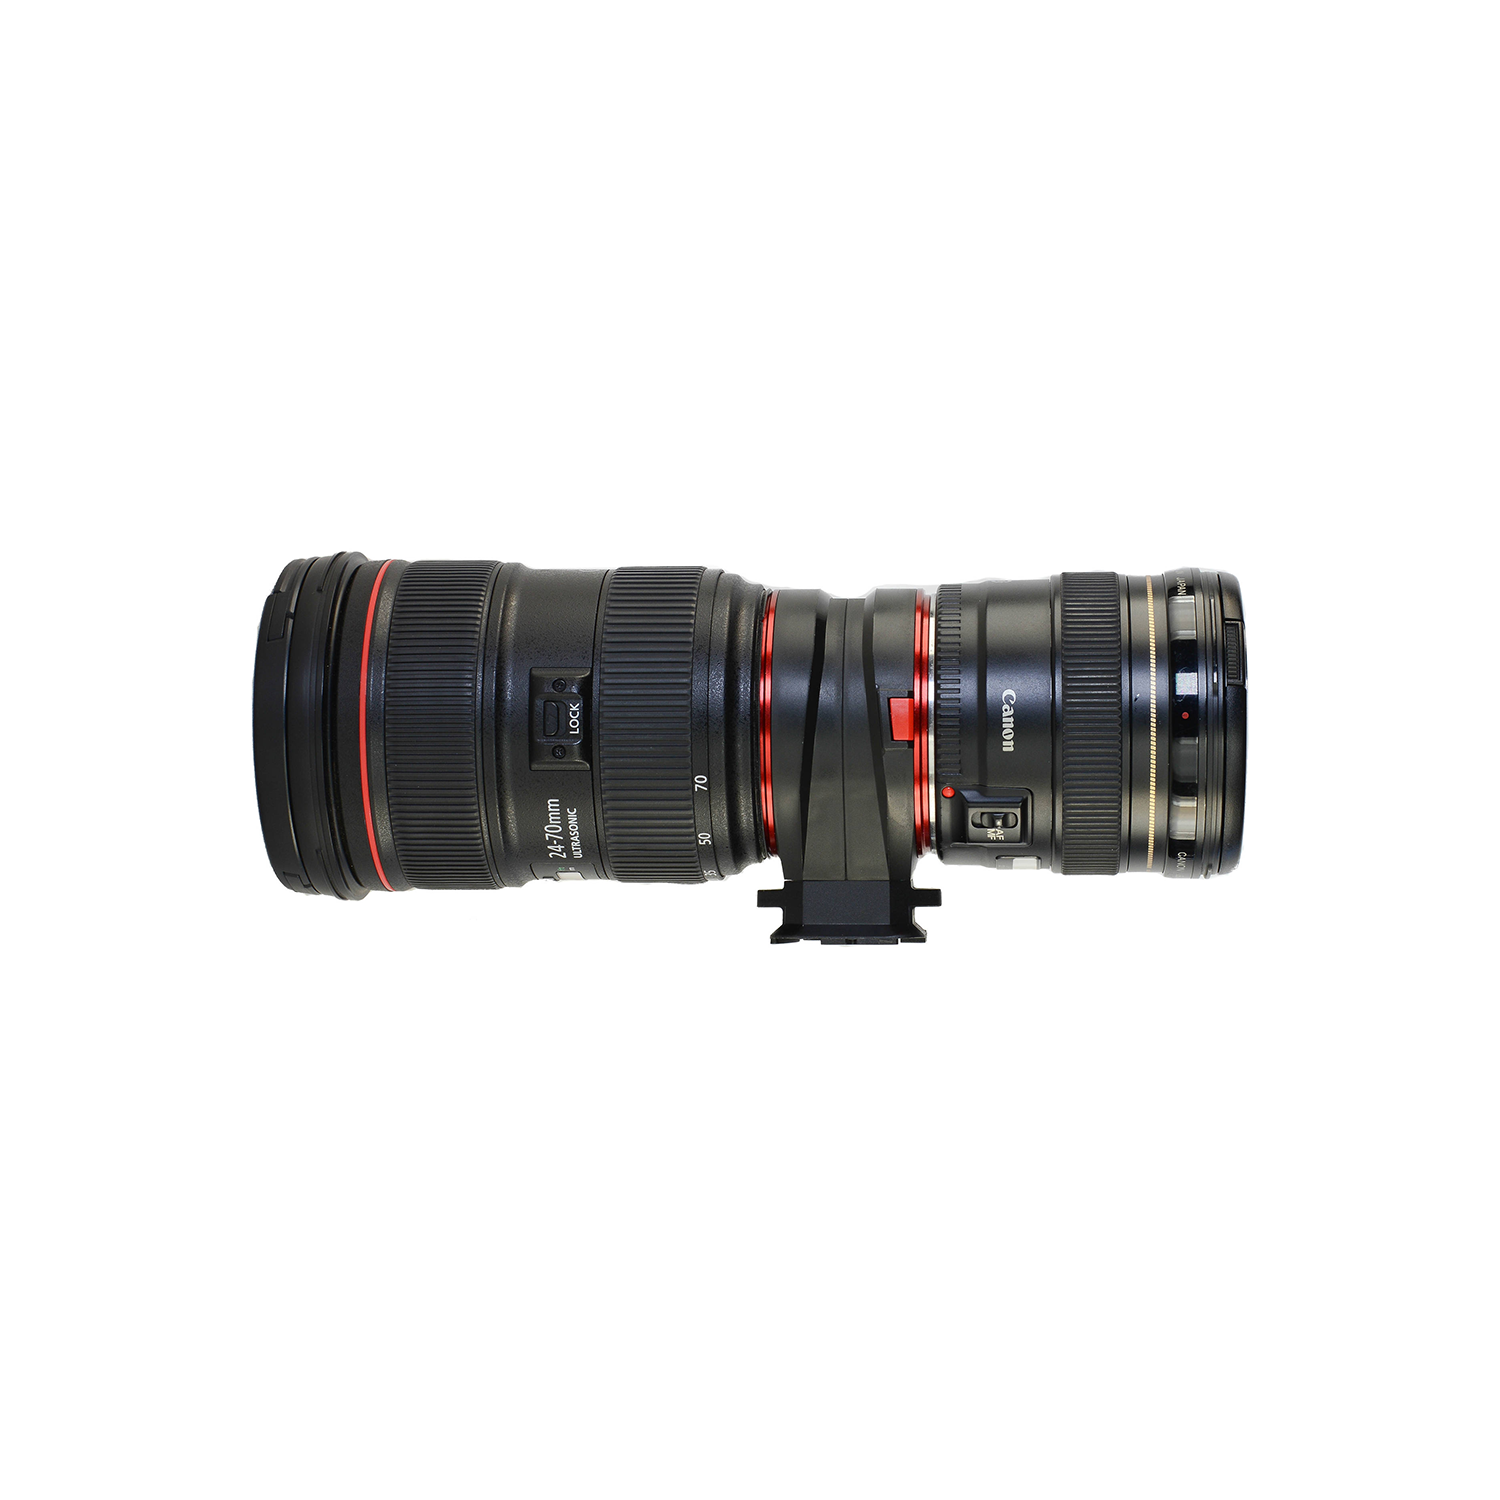 Peak Design Changing Kit Adapter v2 for Canon EF Lens